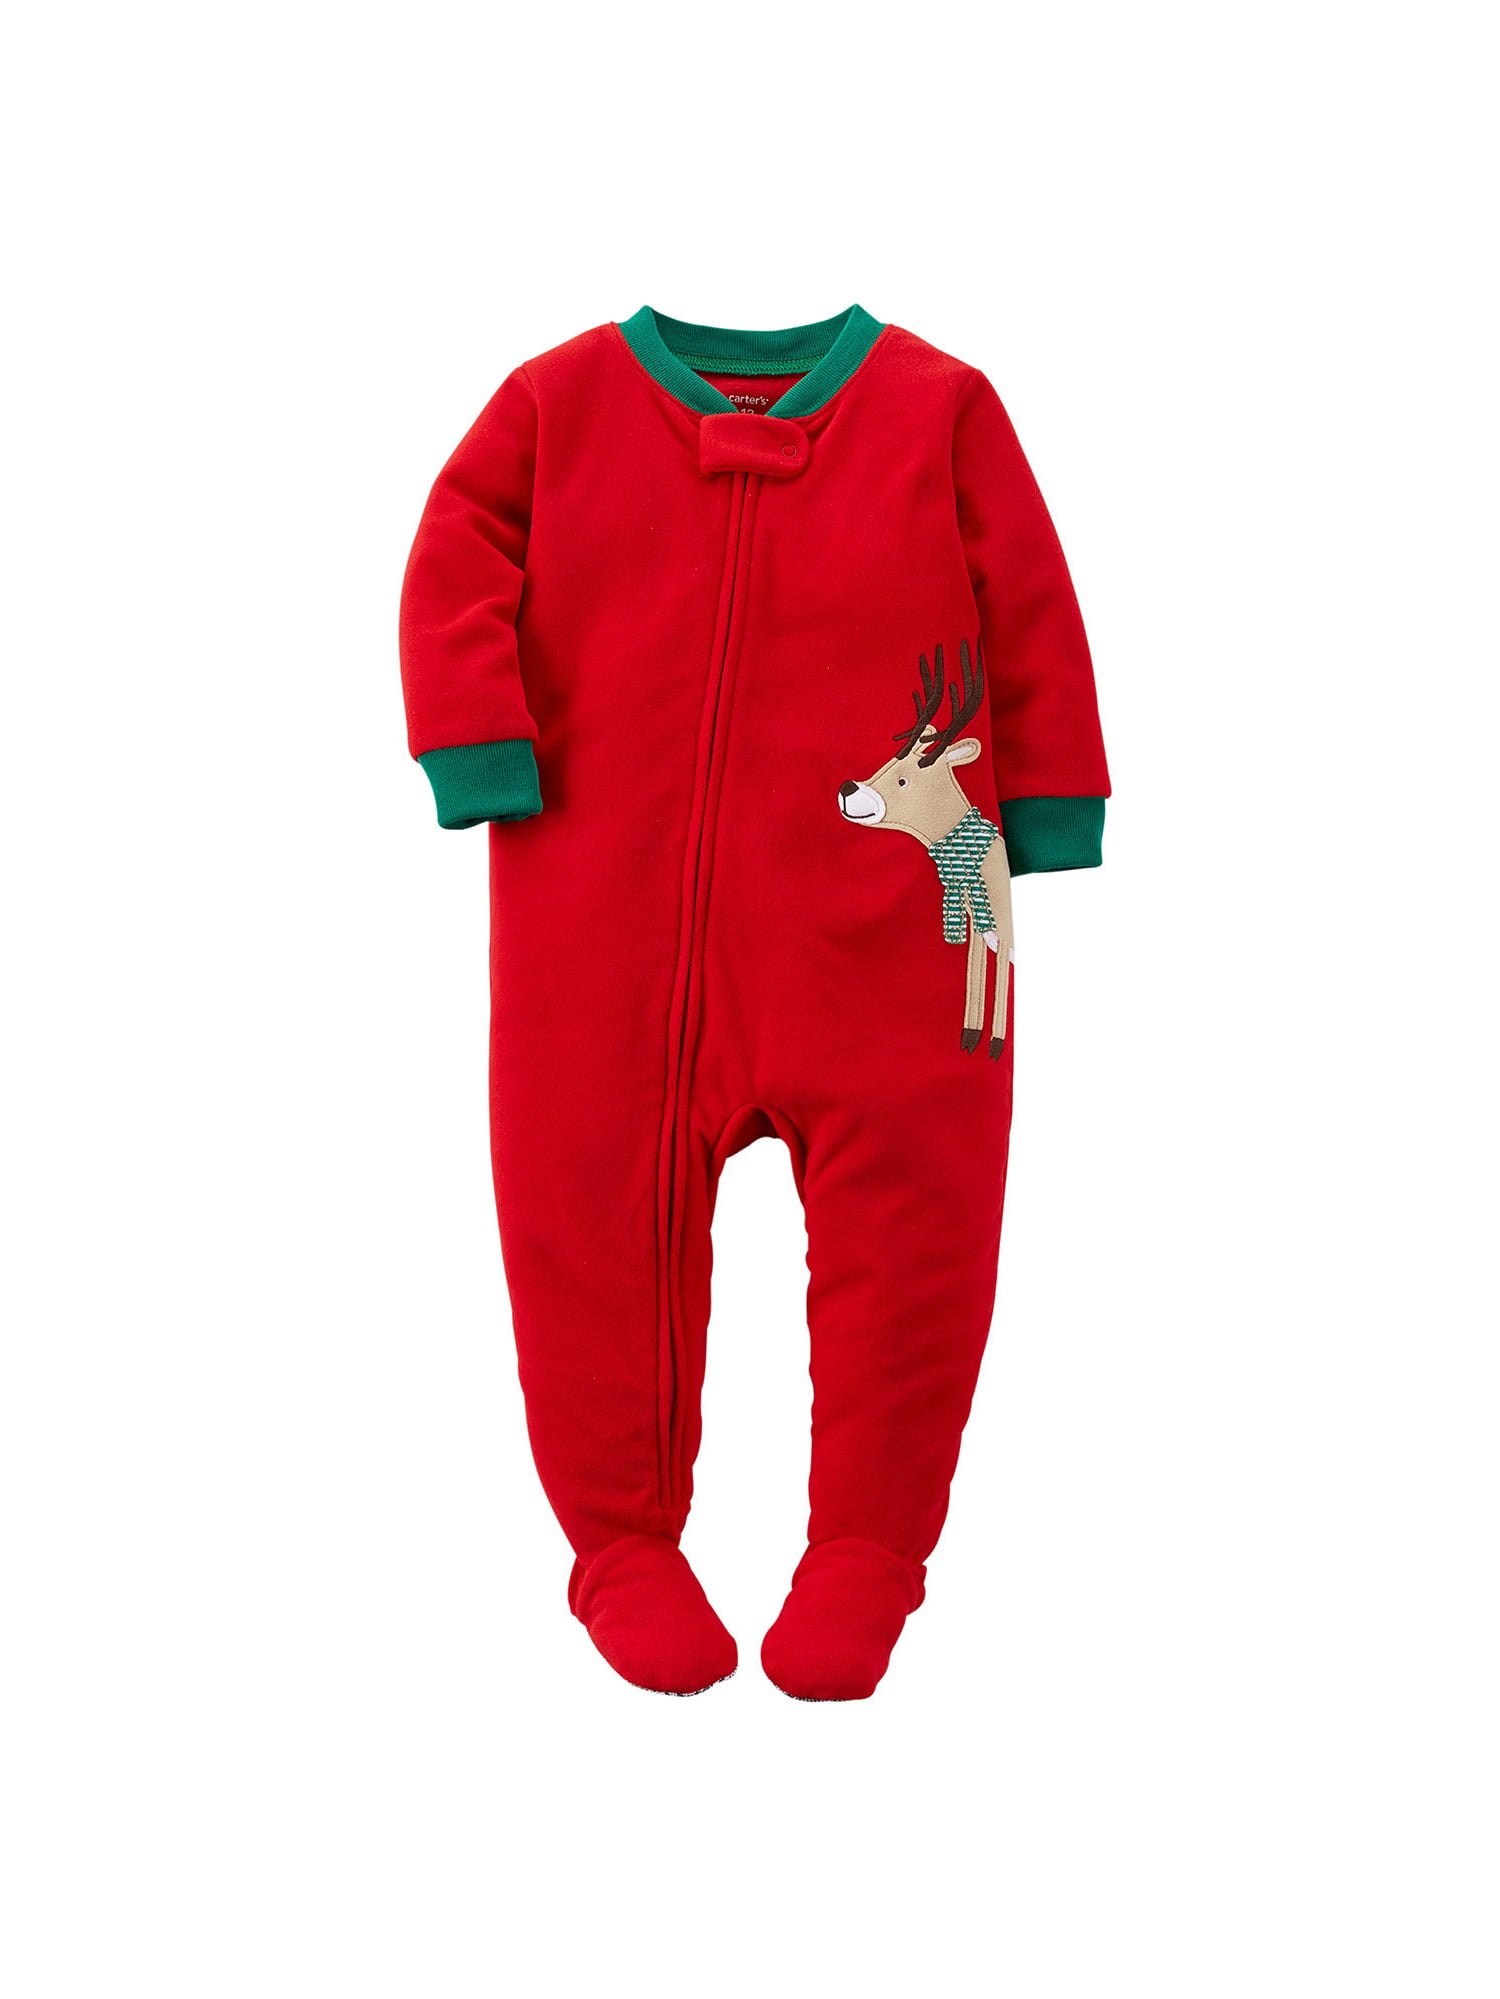 Carters Boys Red Striped Penguin Fleece Footed Pajama Sleeper